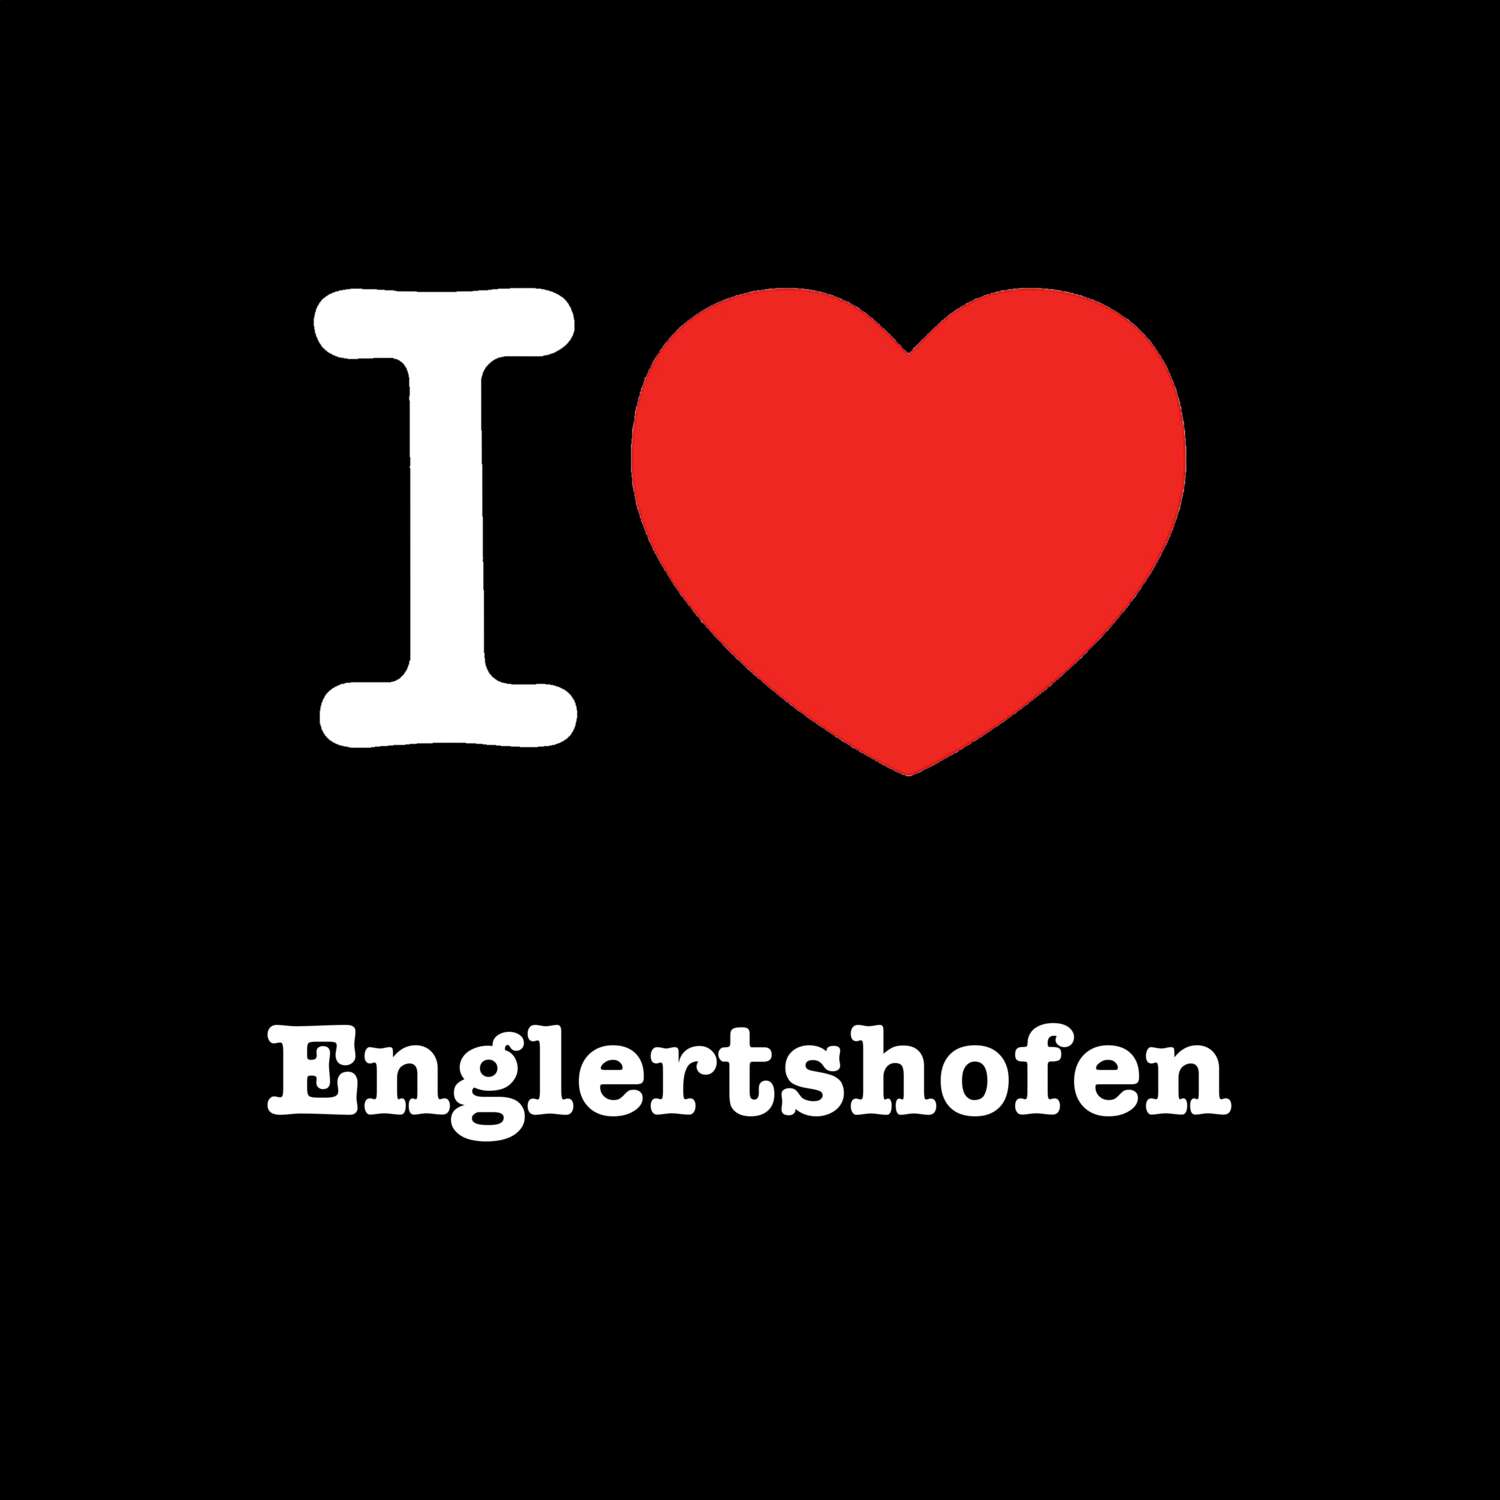 Englertshofen T-Shirt »I love«